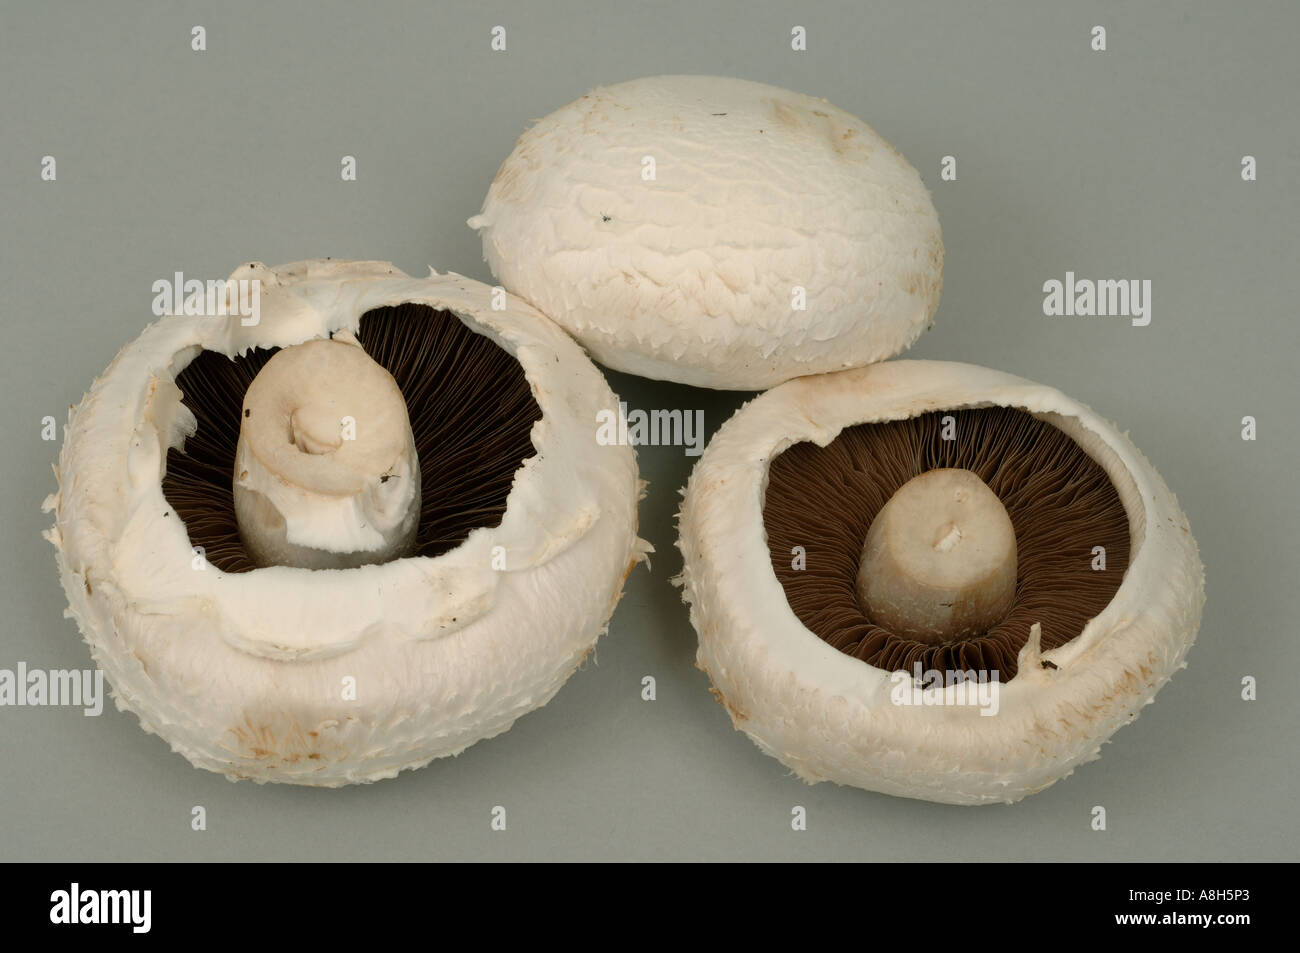 Large flat mushrooms typical supermarket or shop produce Stock Photo